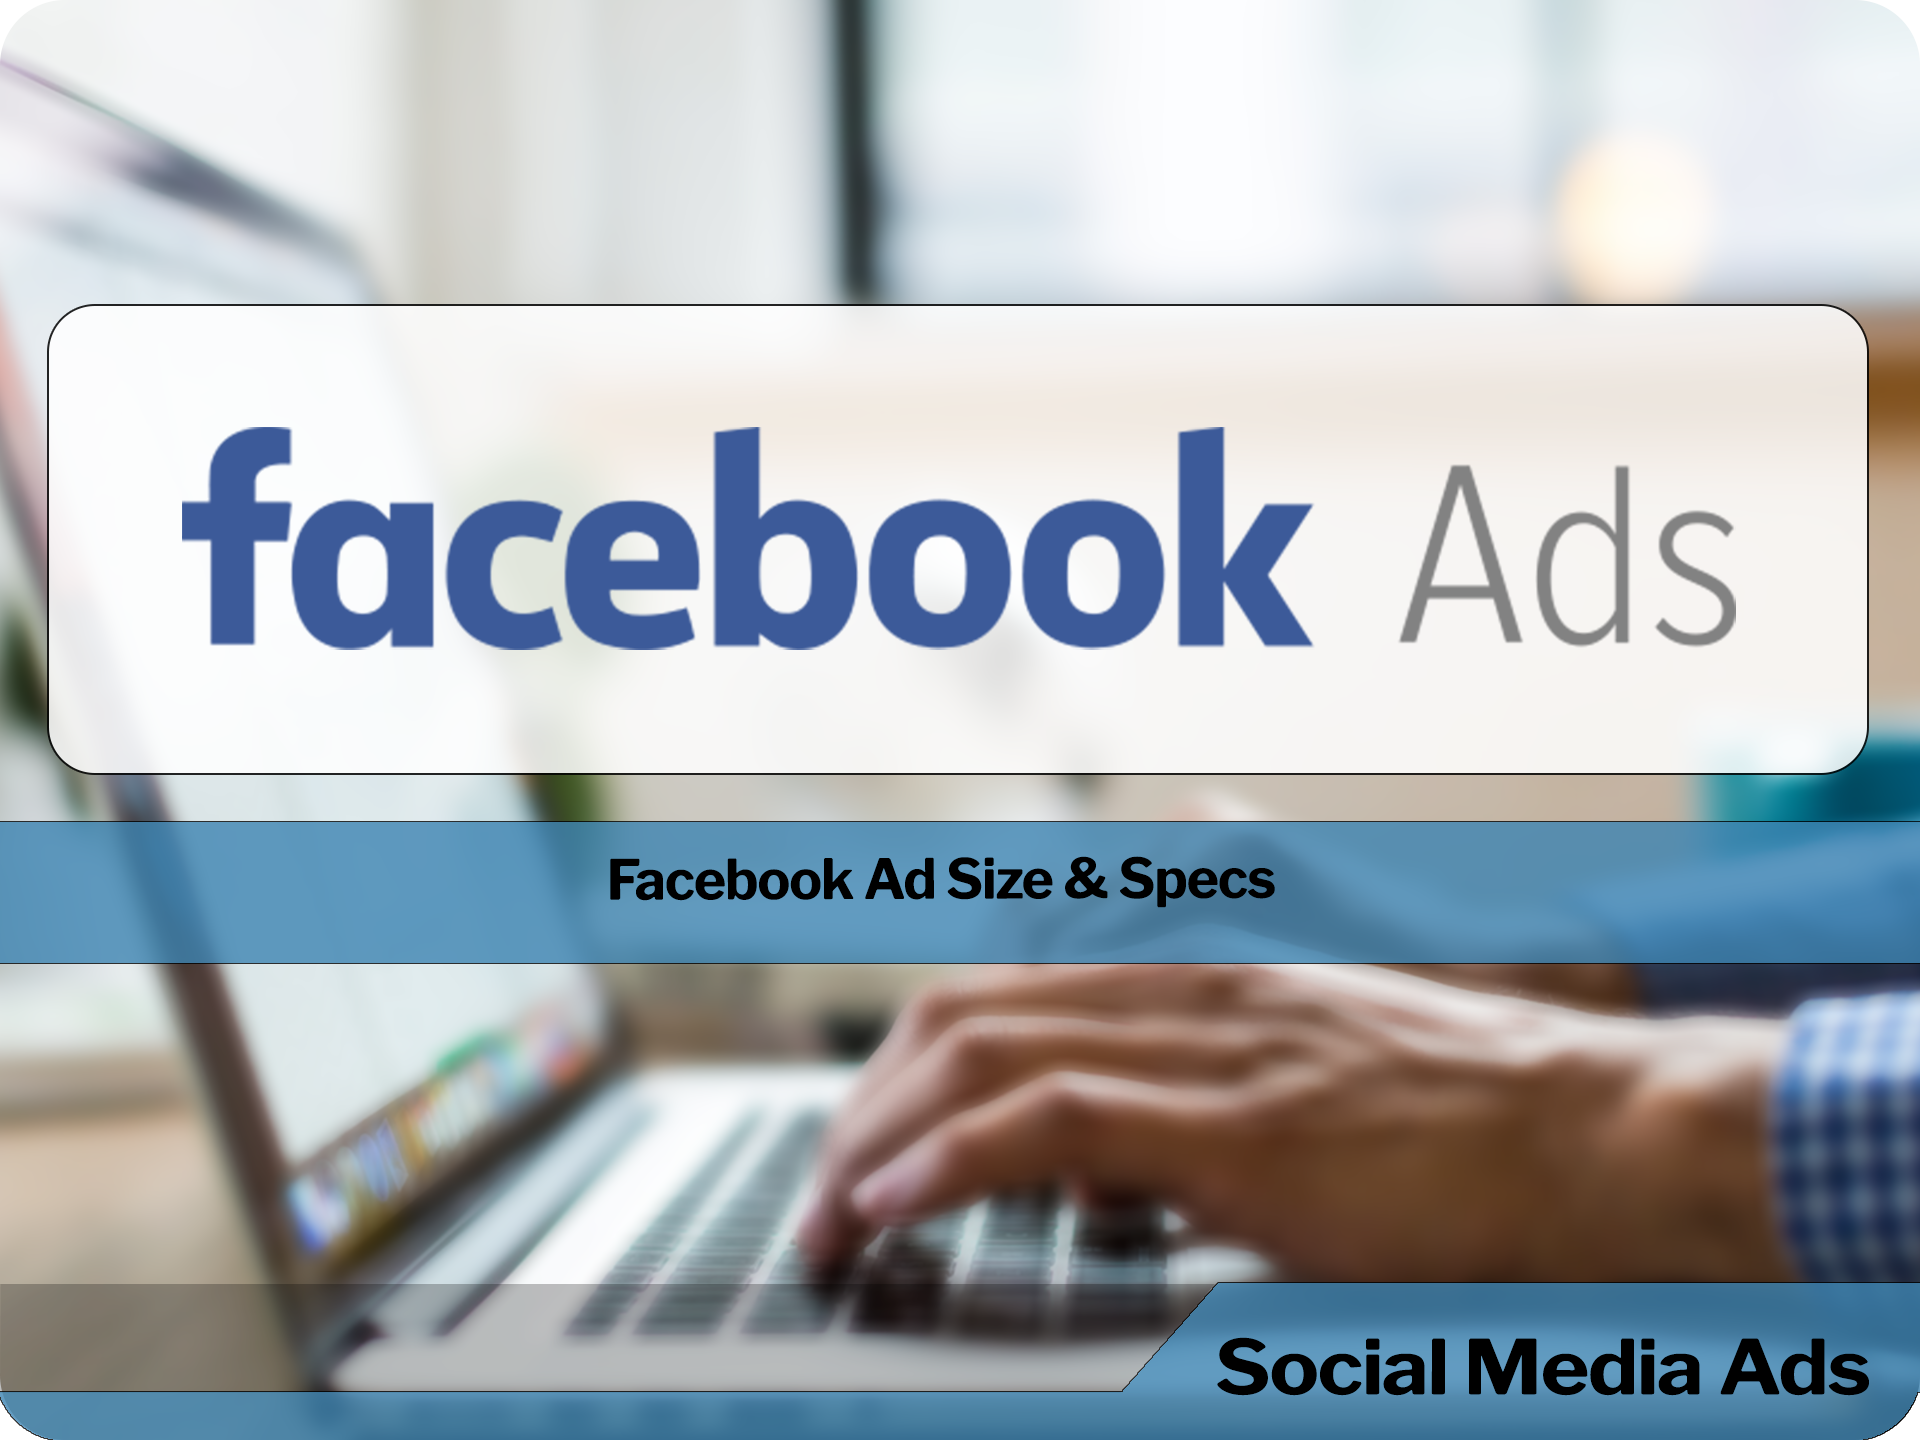 Facebook Ad Size & Specs